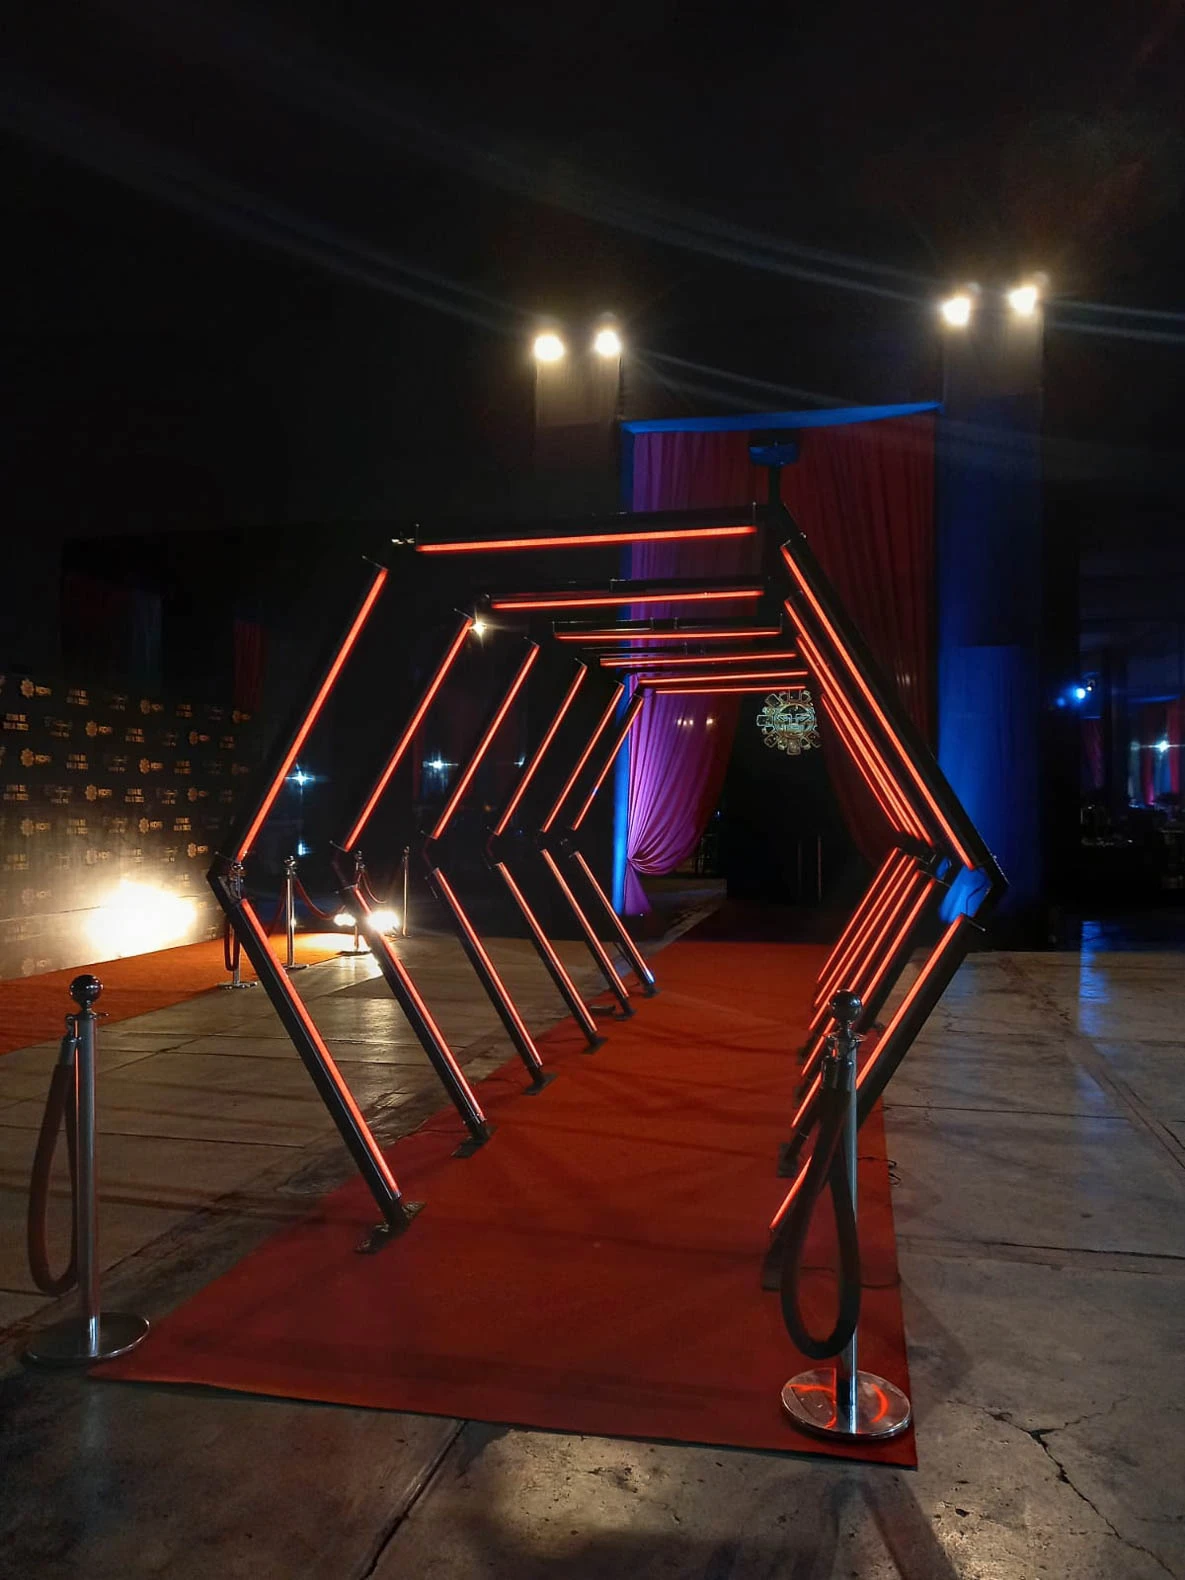 Túnel LED hexagonal rojo: Entrada impactante sobre alfombra roja, perfecta para eventos de gala y celebraciones. - Túnel hexagonal led - scratch perú.